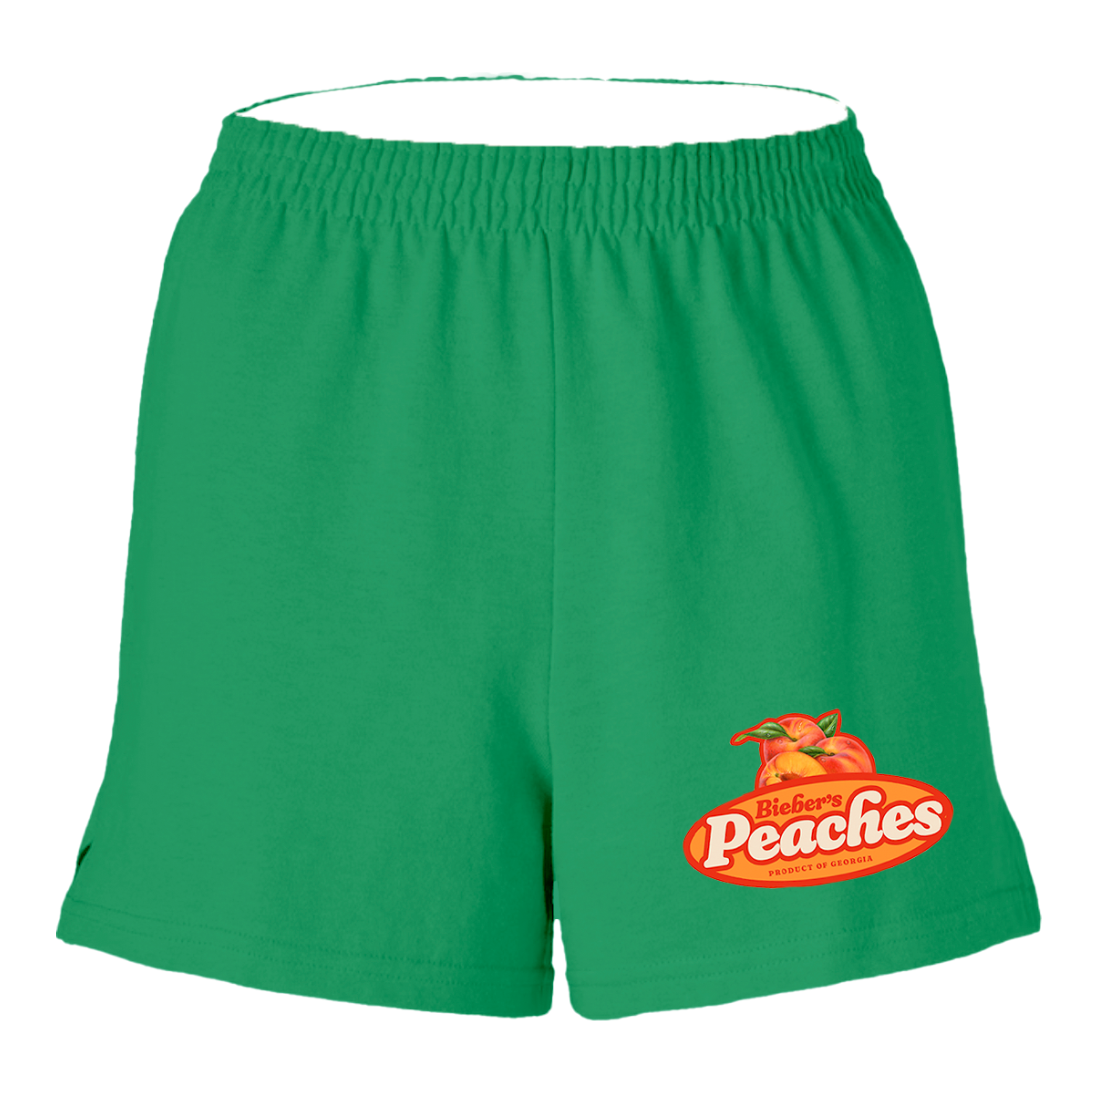 justin bieber - Peaches Green PE Shorts